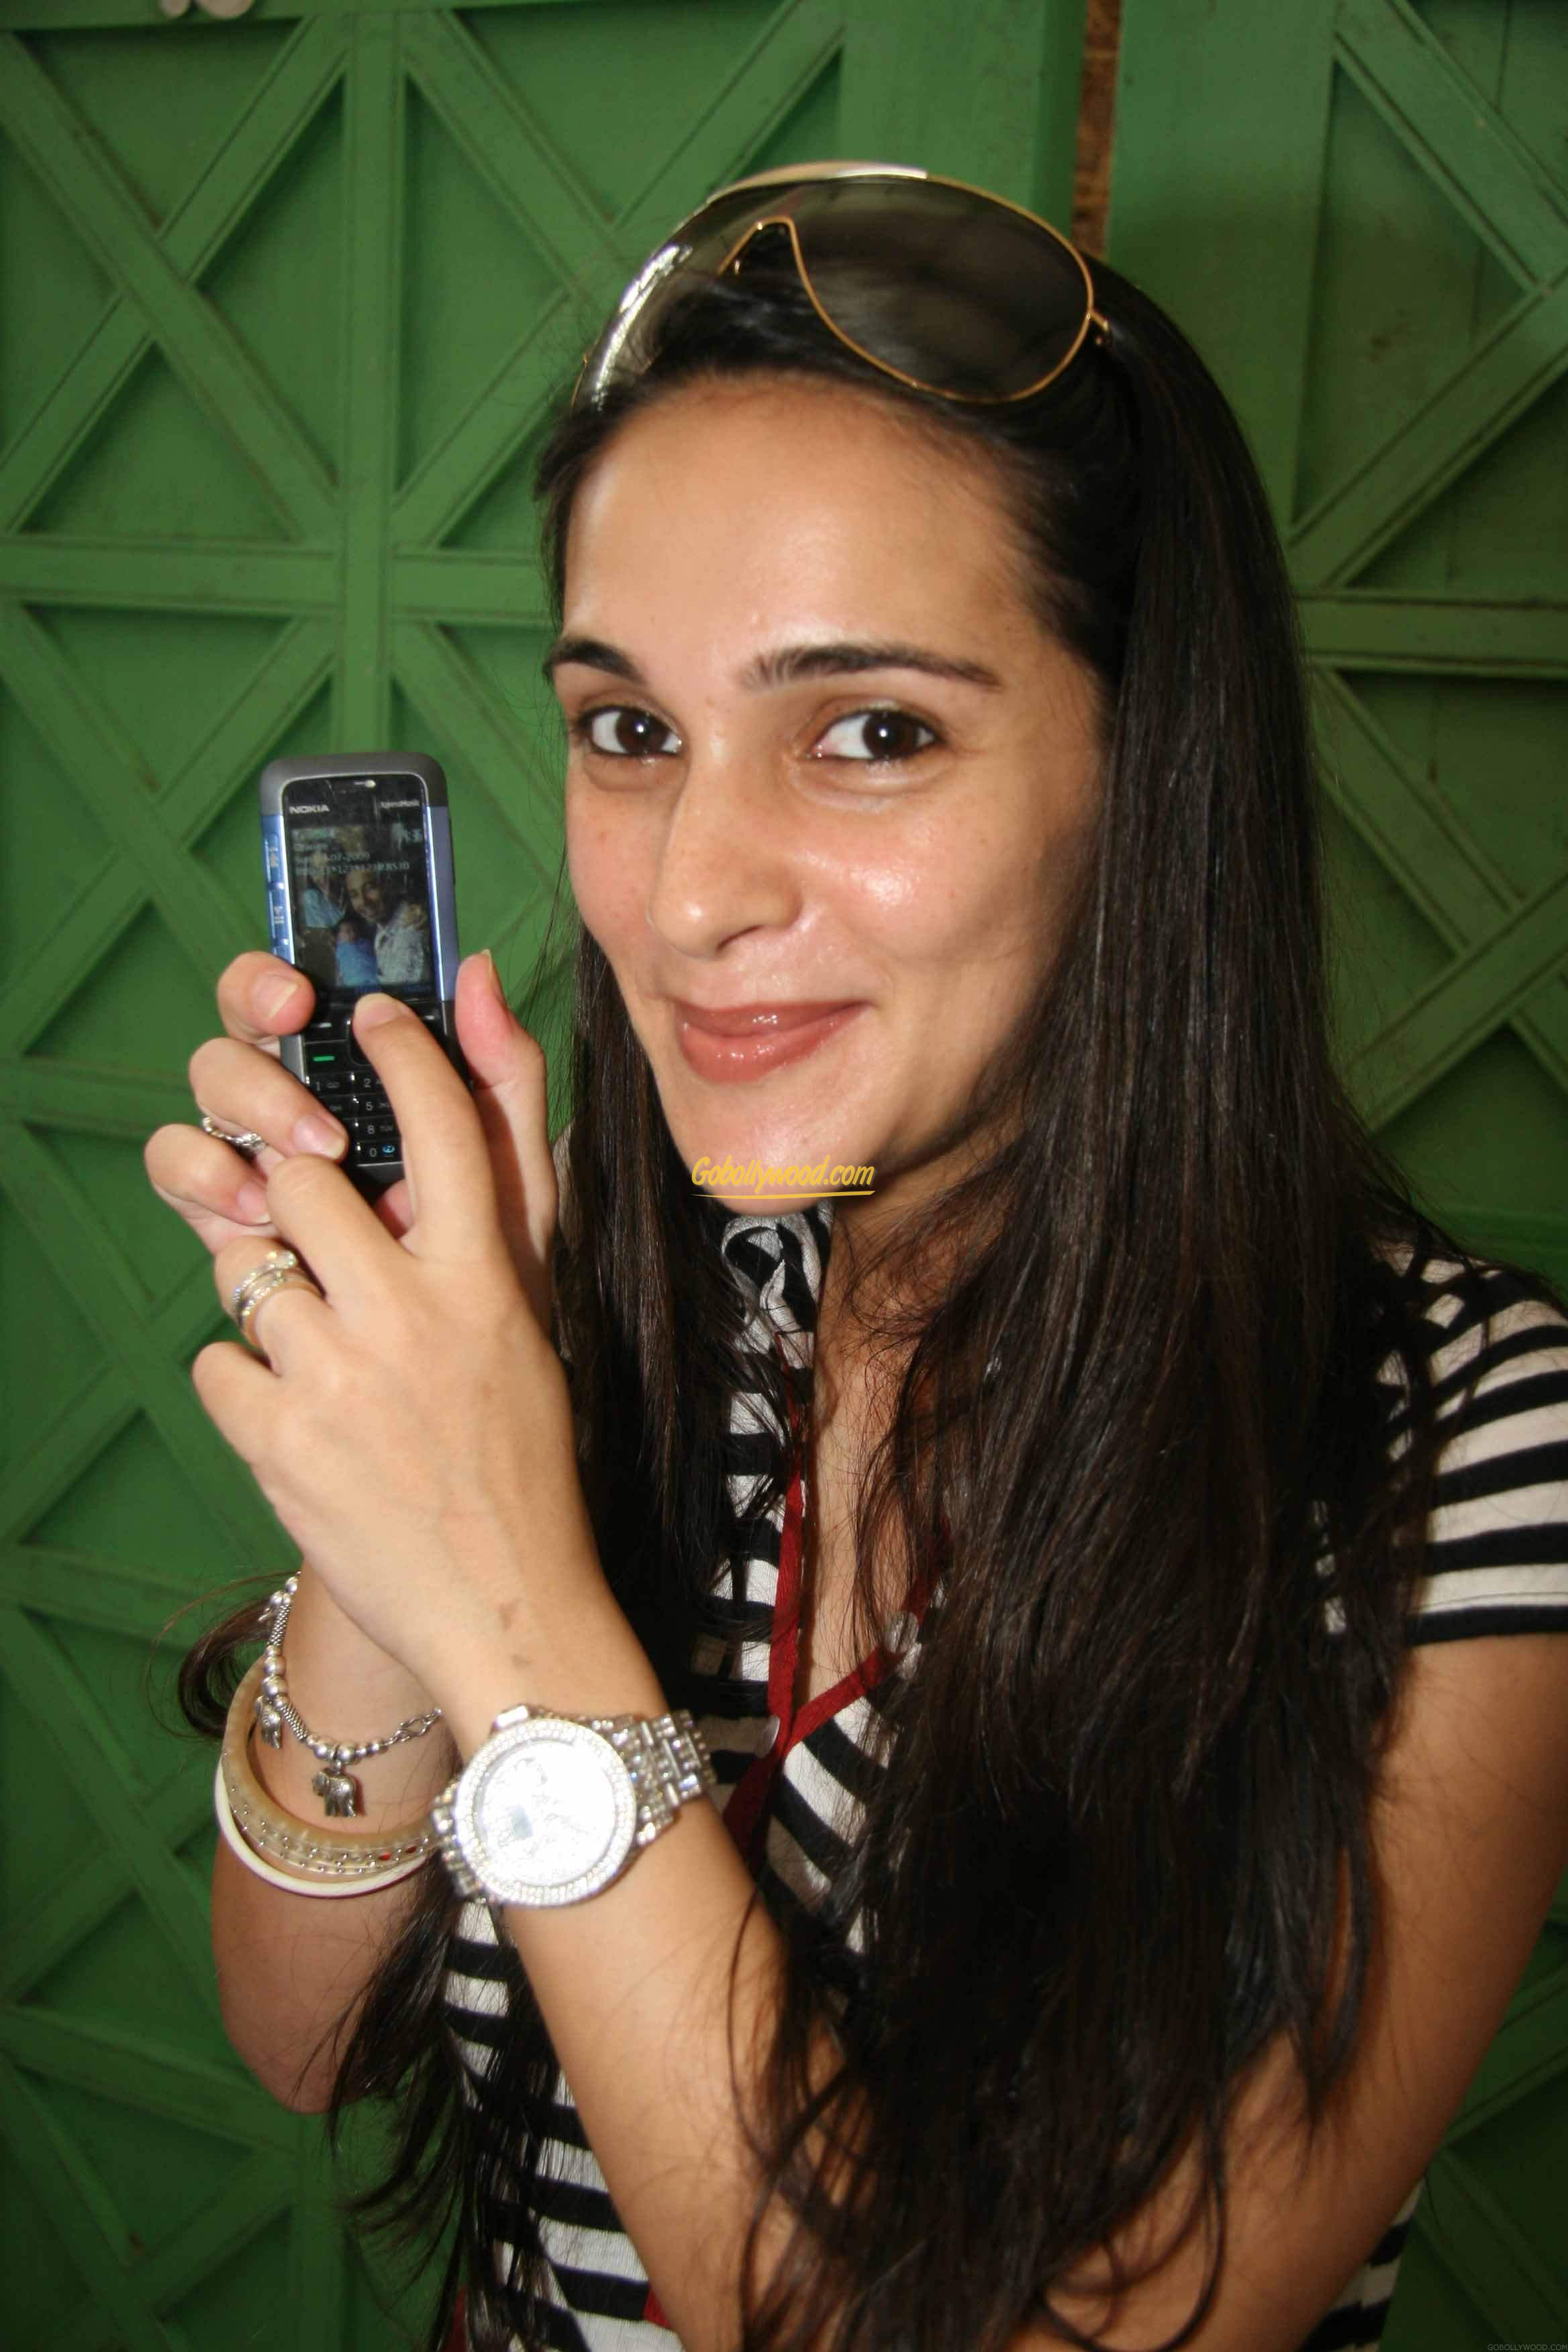 Tara Sharma Showing Photograph On Her Phone